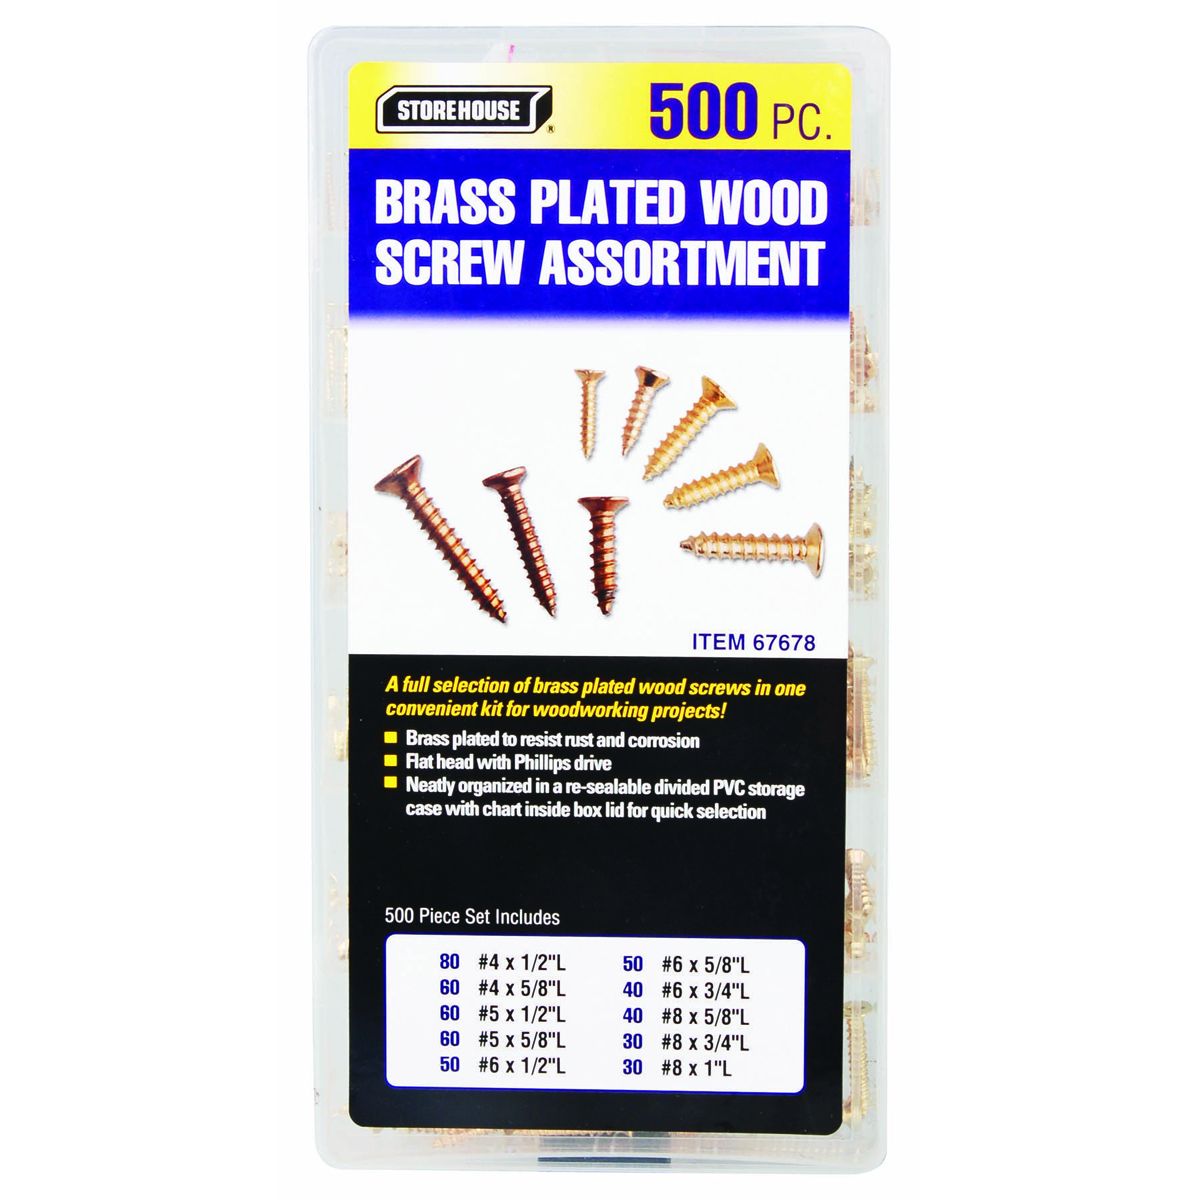 STOREHOUSE 500 Piece Brass Plated Wood Screw Assortment